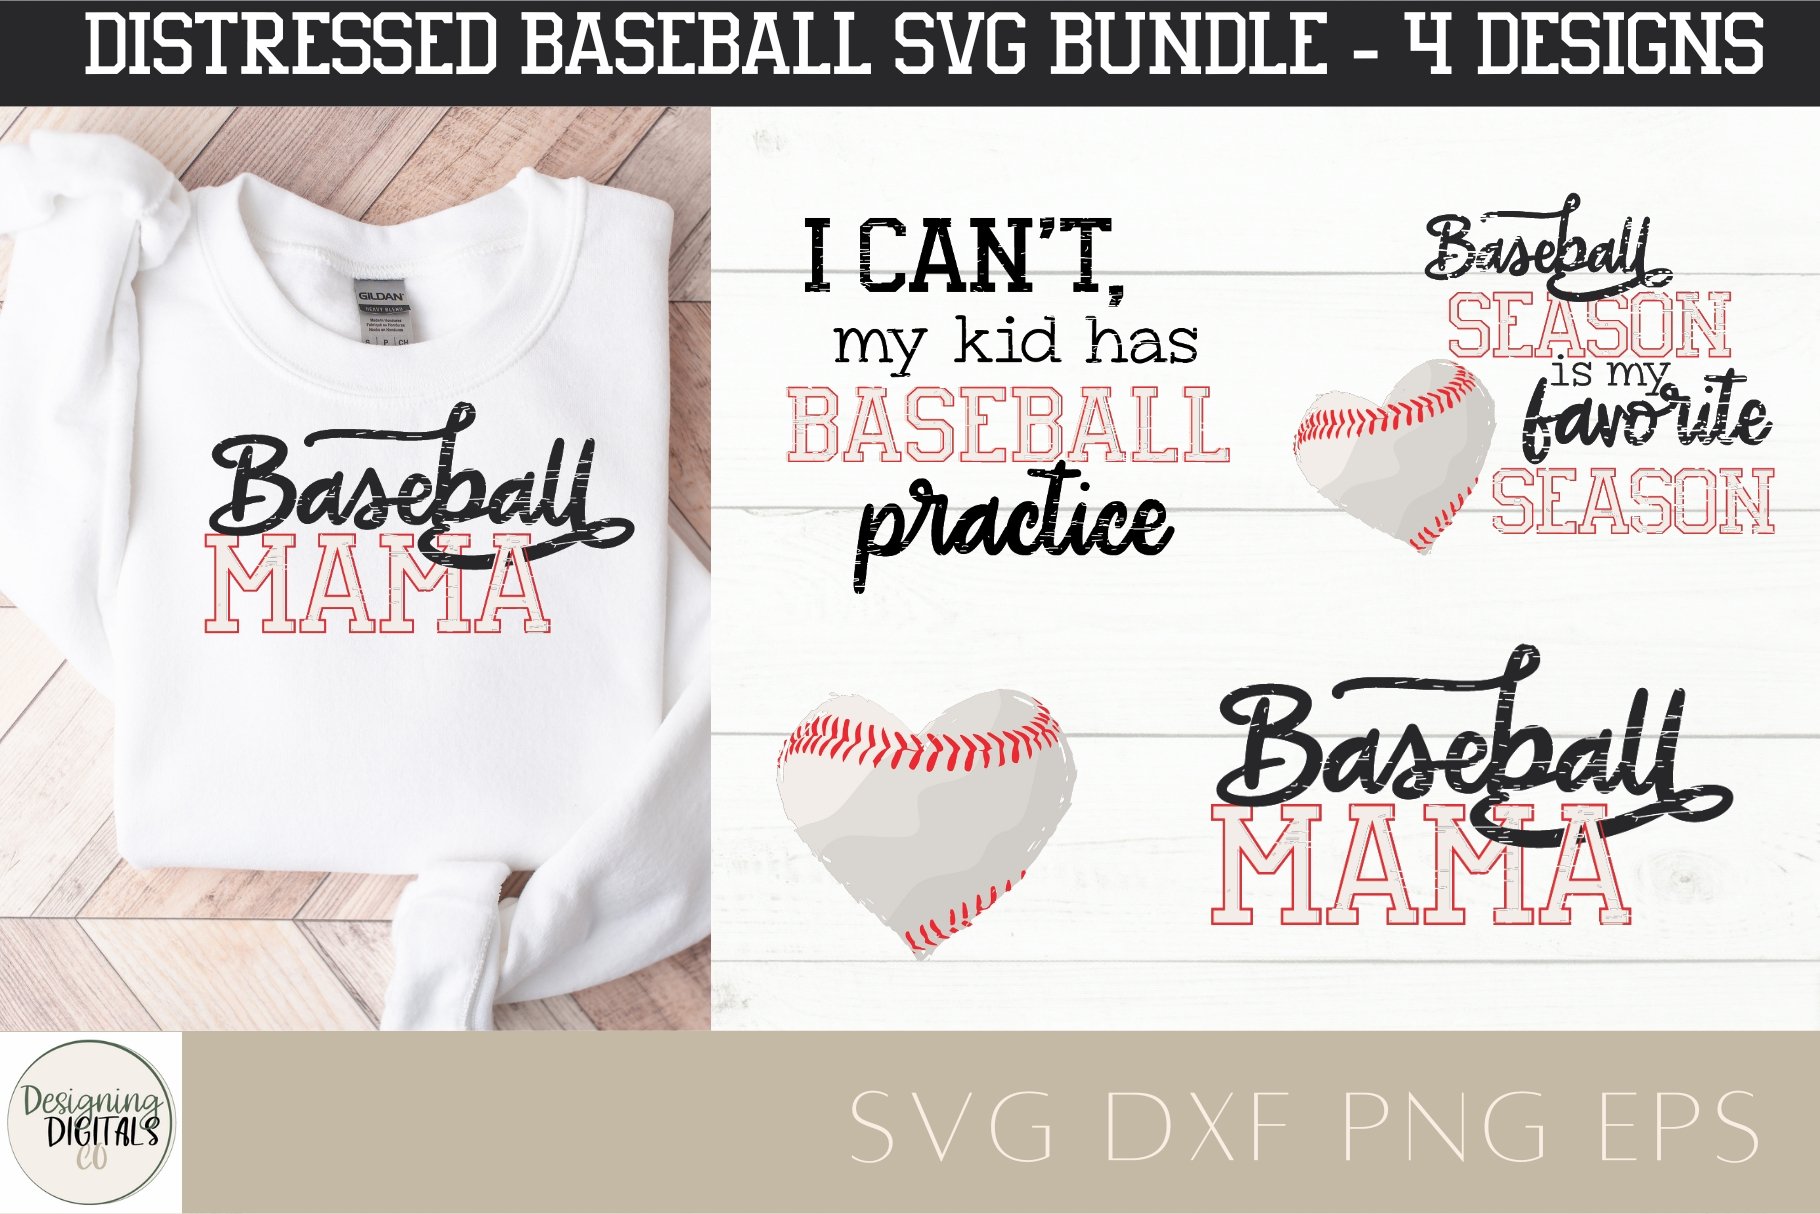 Baseball SVG Bundle, Baseball Mama cover image.